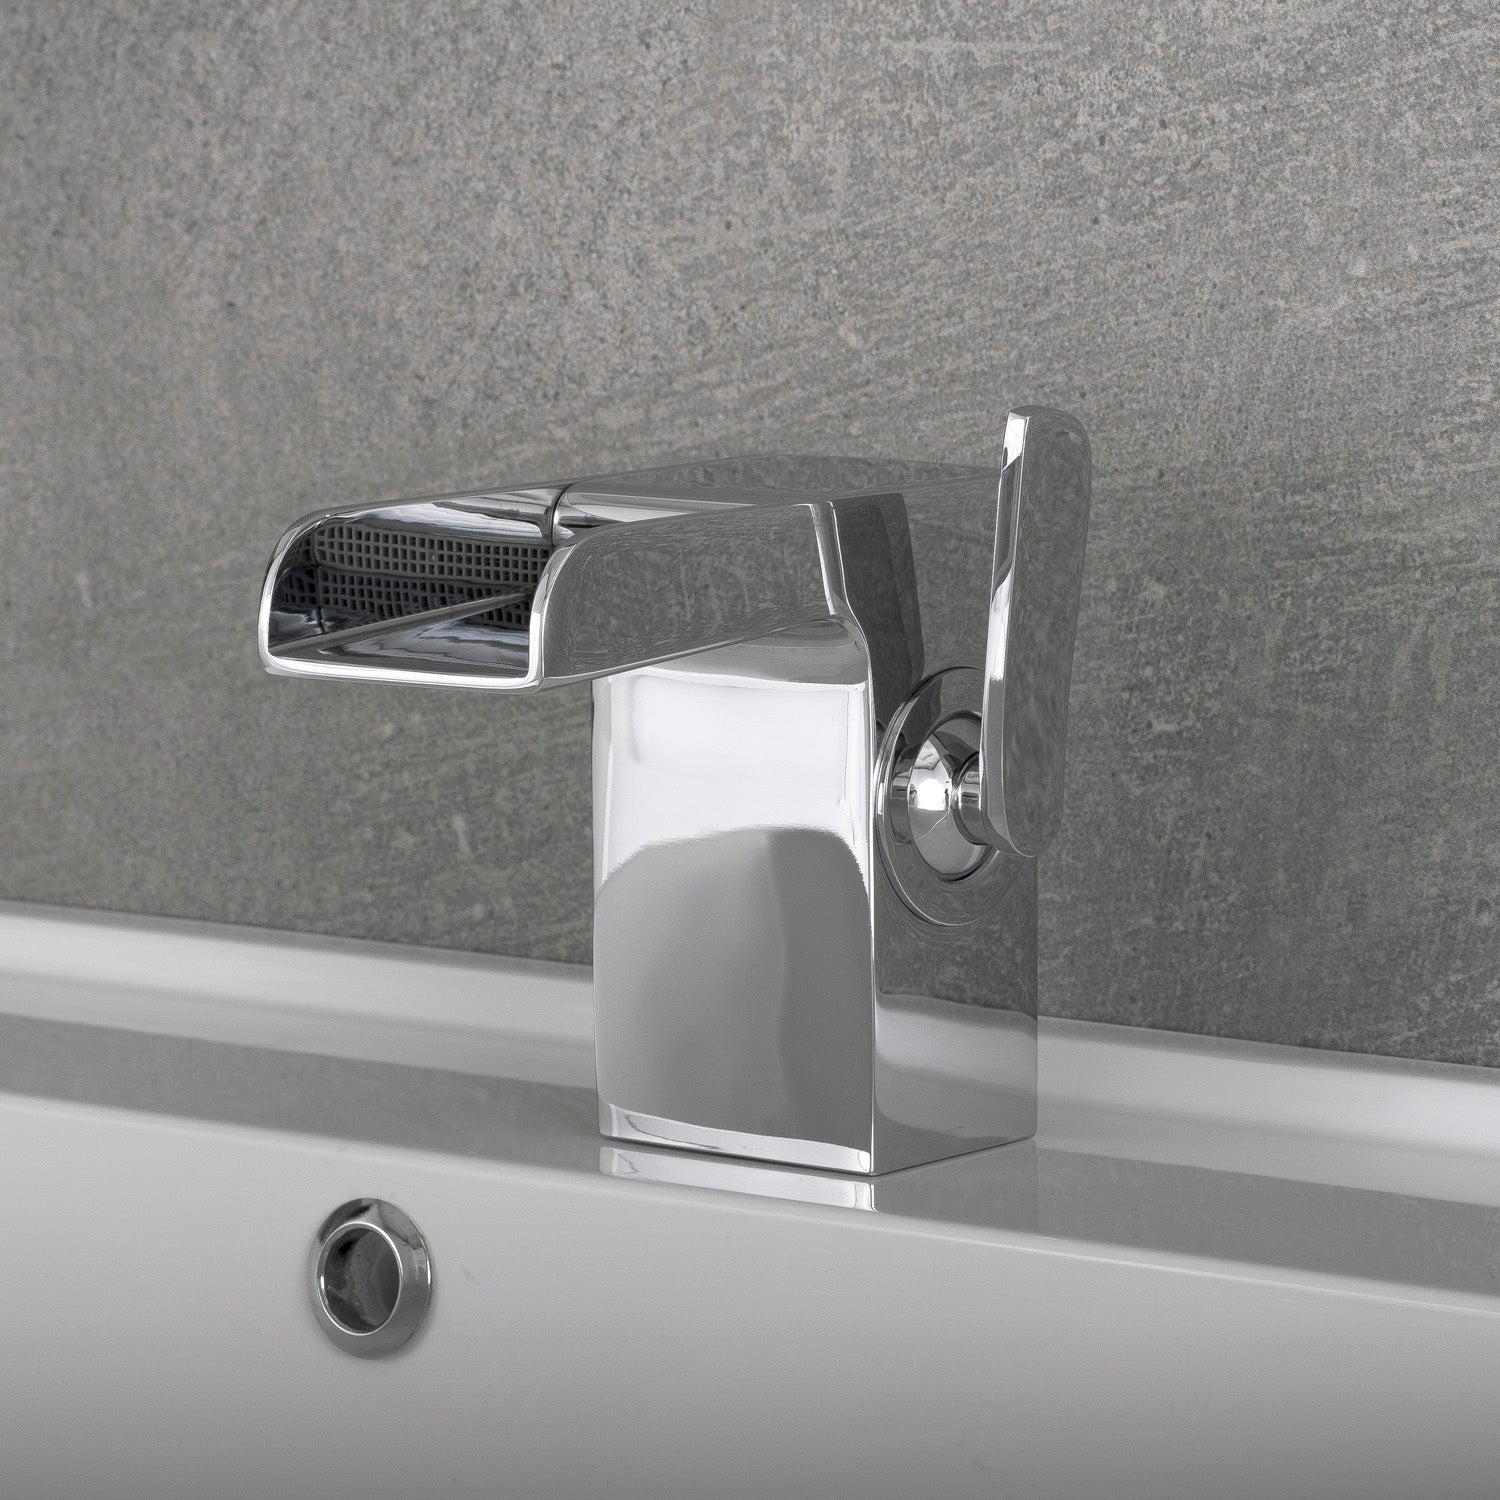 DAX Single Handle Waterfall Bathroom Faucet, Brass Body, Chrome Finish, 5-1/8 x 4-5/16 Inches (DAX-9825)